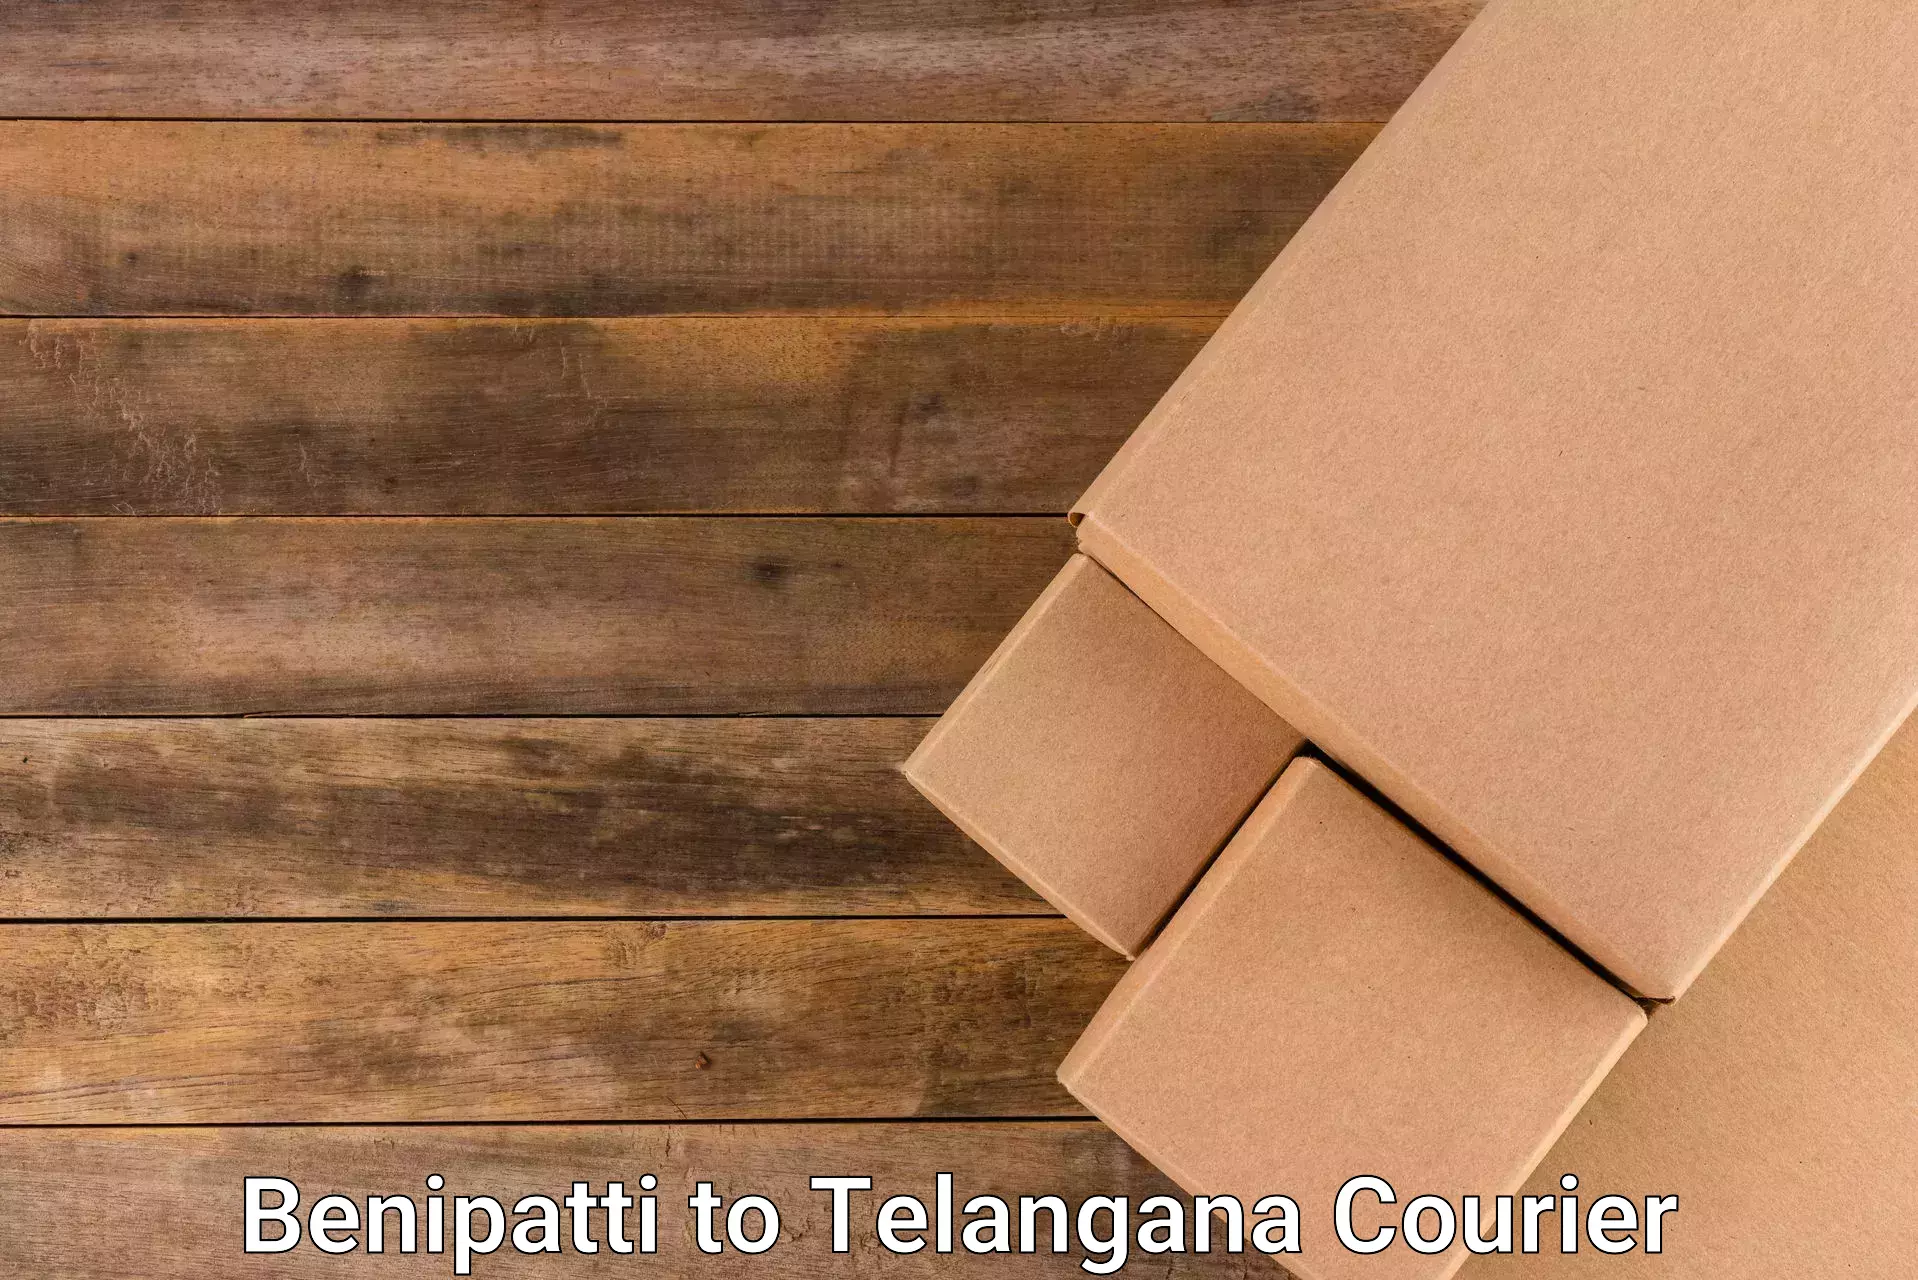 Shipping and handling Benipatti to Sikanderguda